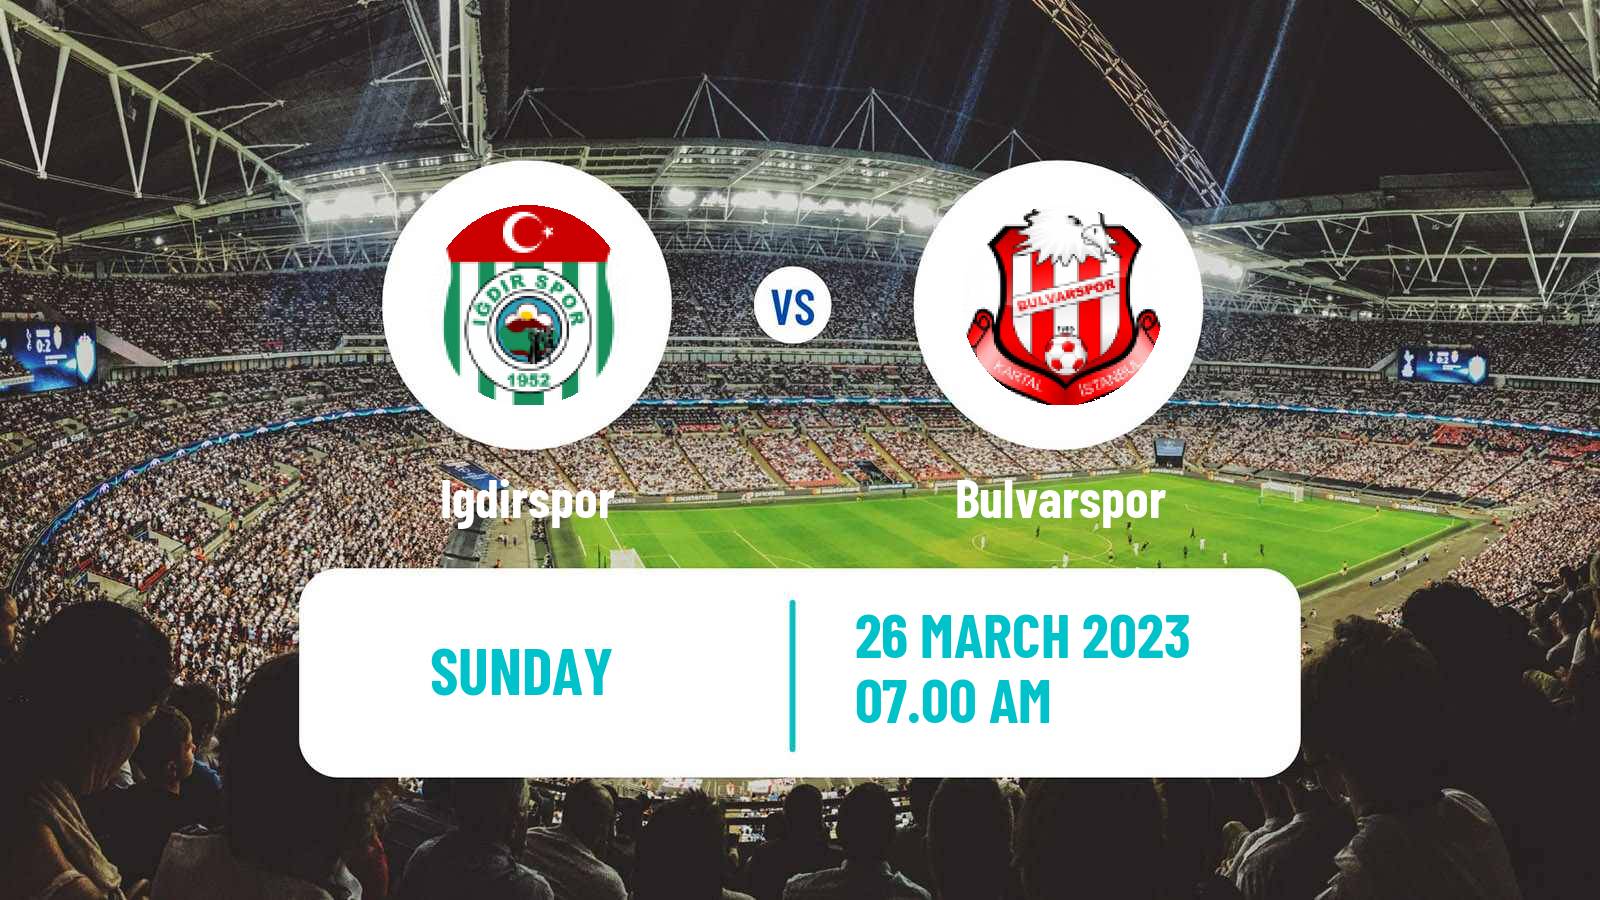 Soccer Turkish 3 Lig Group 2 Igdirspor - Bulvarspor